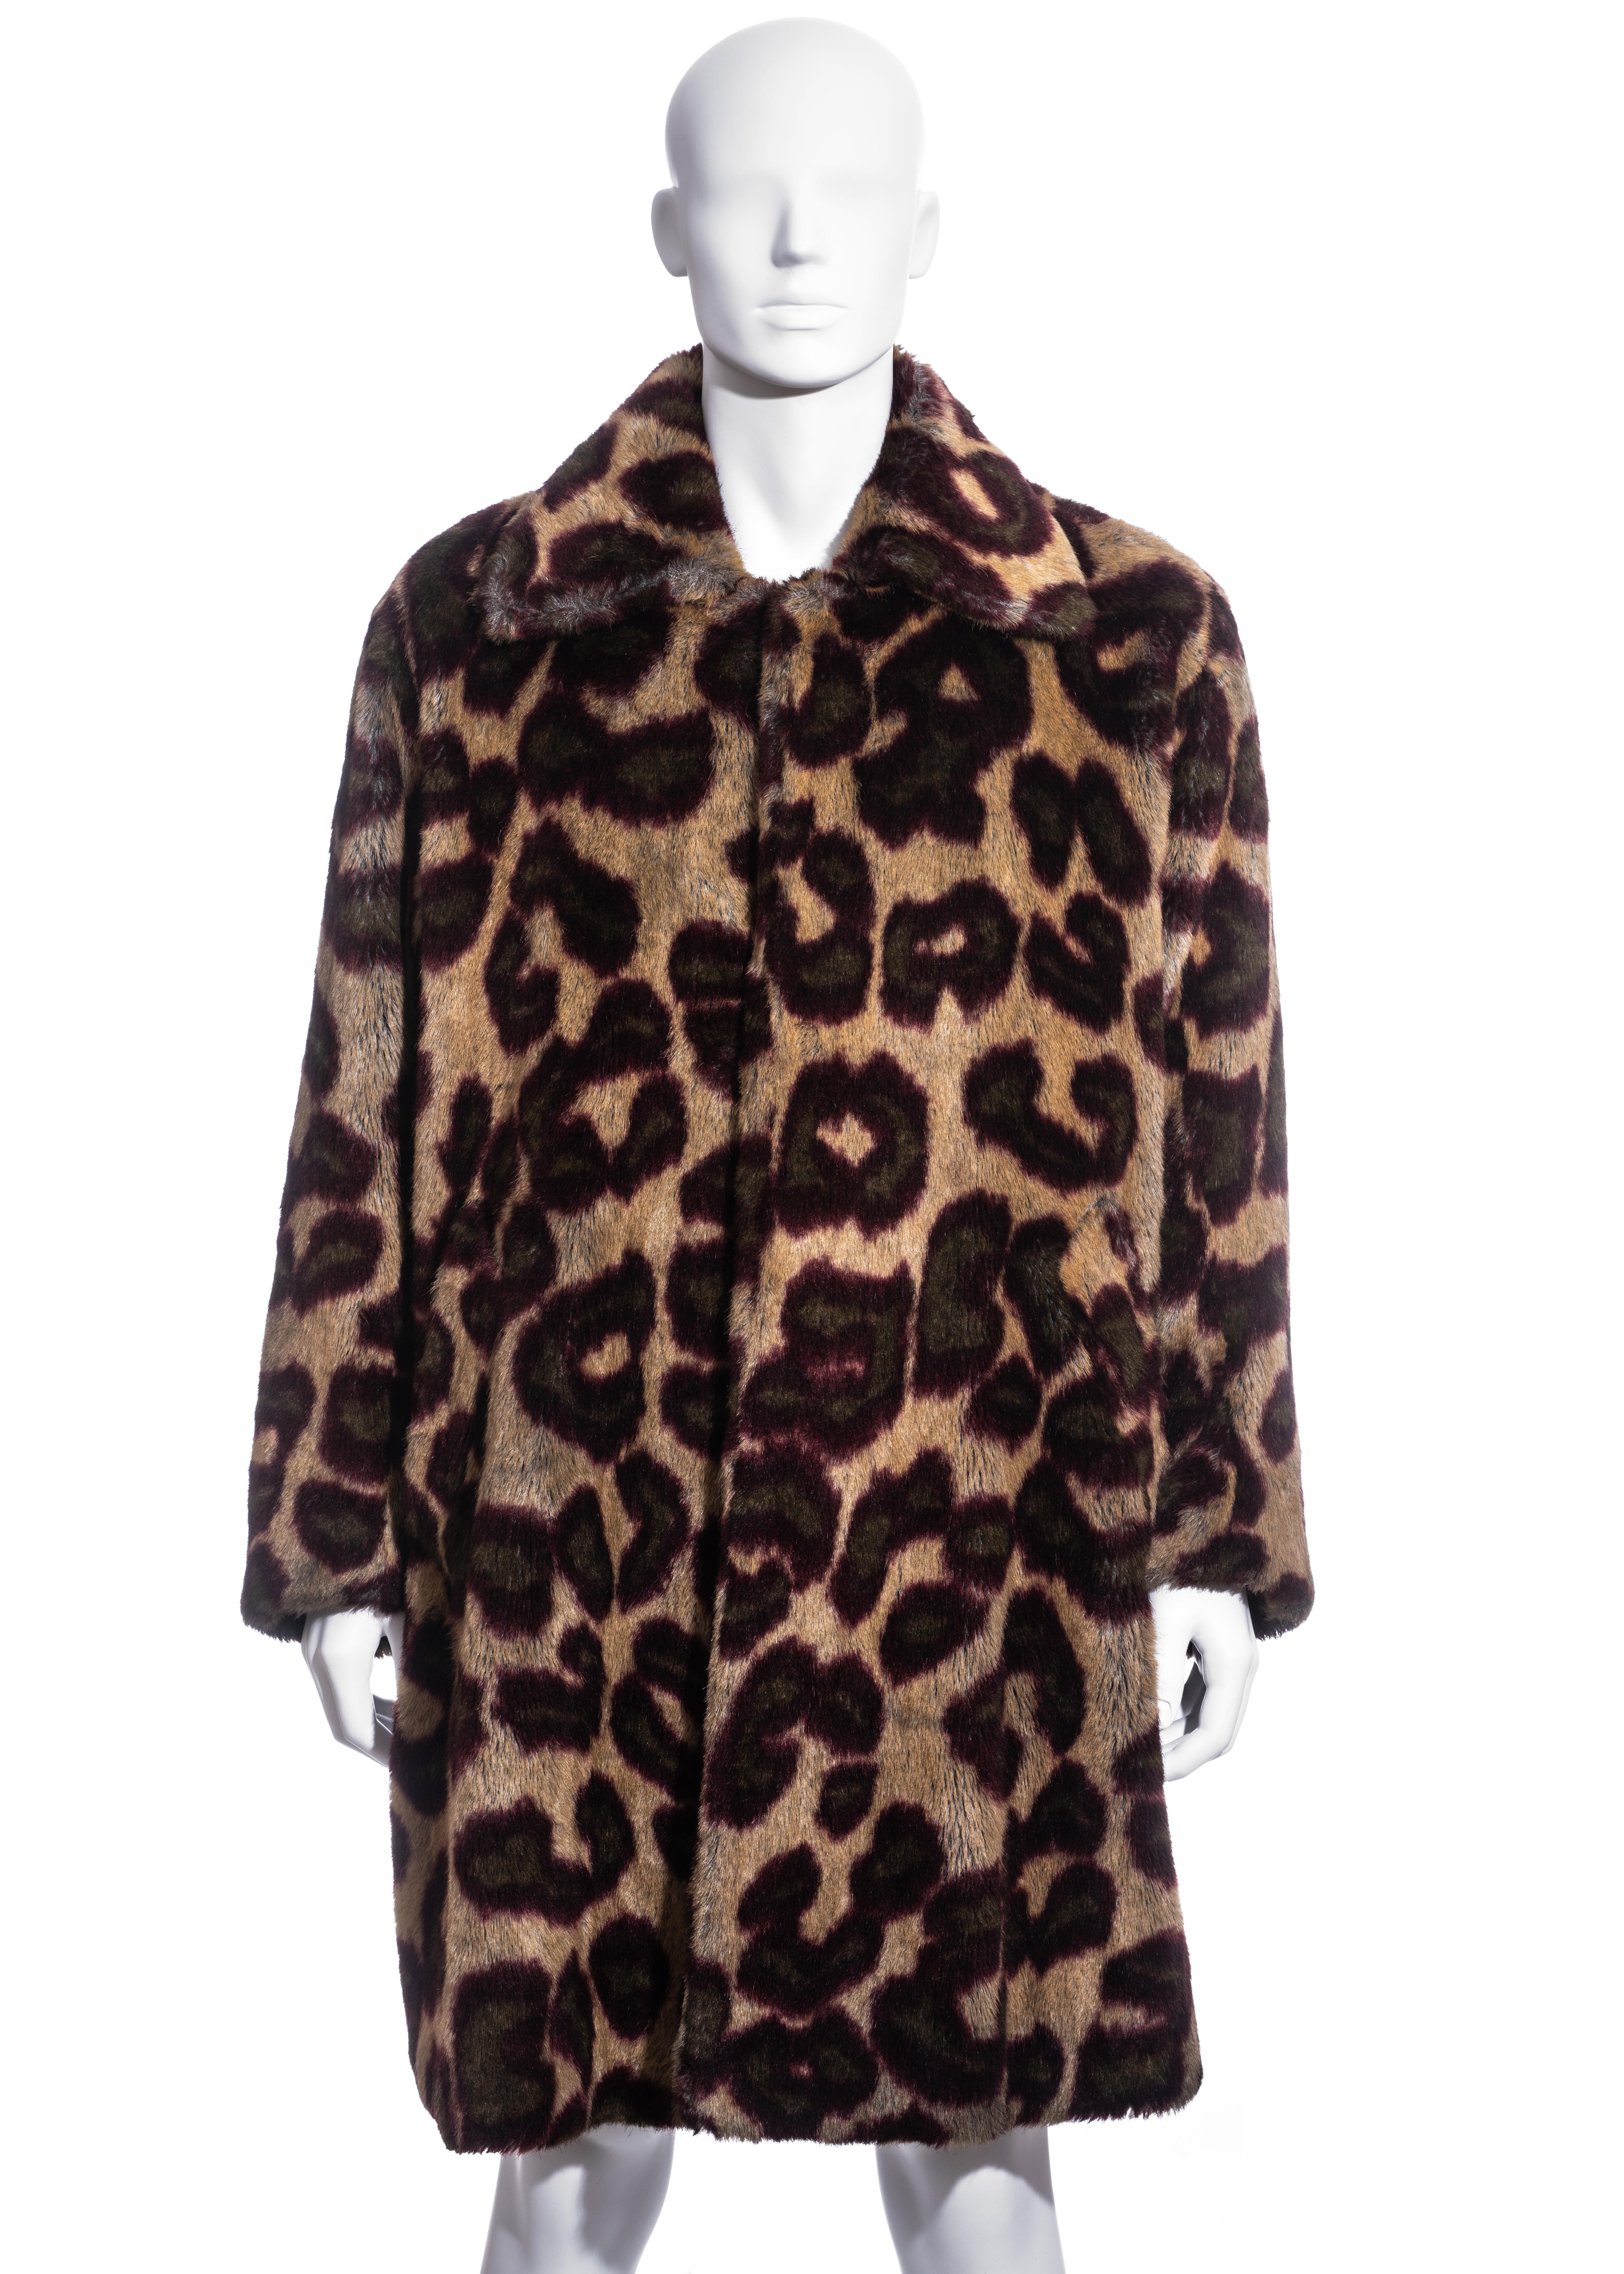 ▪ Unisex Vivienne Westwood leopard print coat
▪ Faux fur
▪ Hidden front hook fastenings
▪ Two side pockets
▪ Relaxed fit
▪ Size 48
▪ Fall-Winter 1998